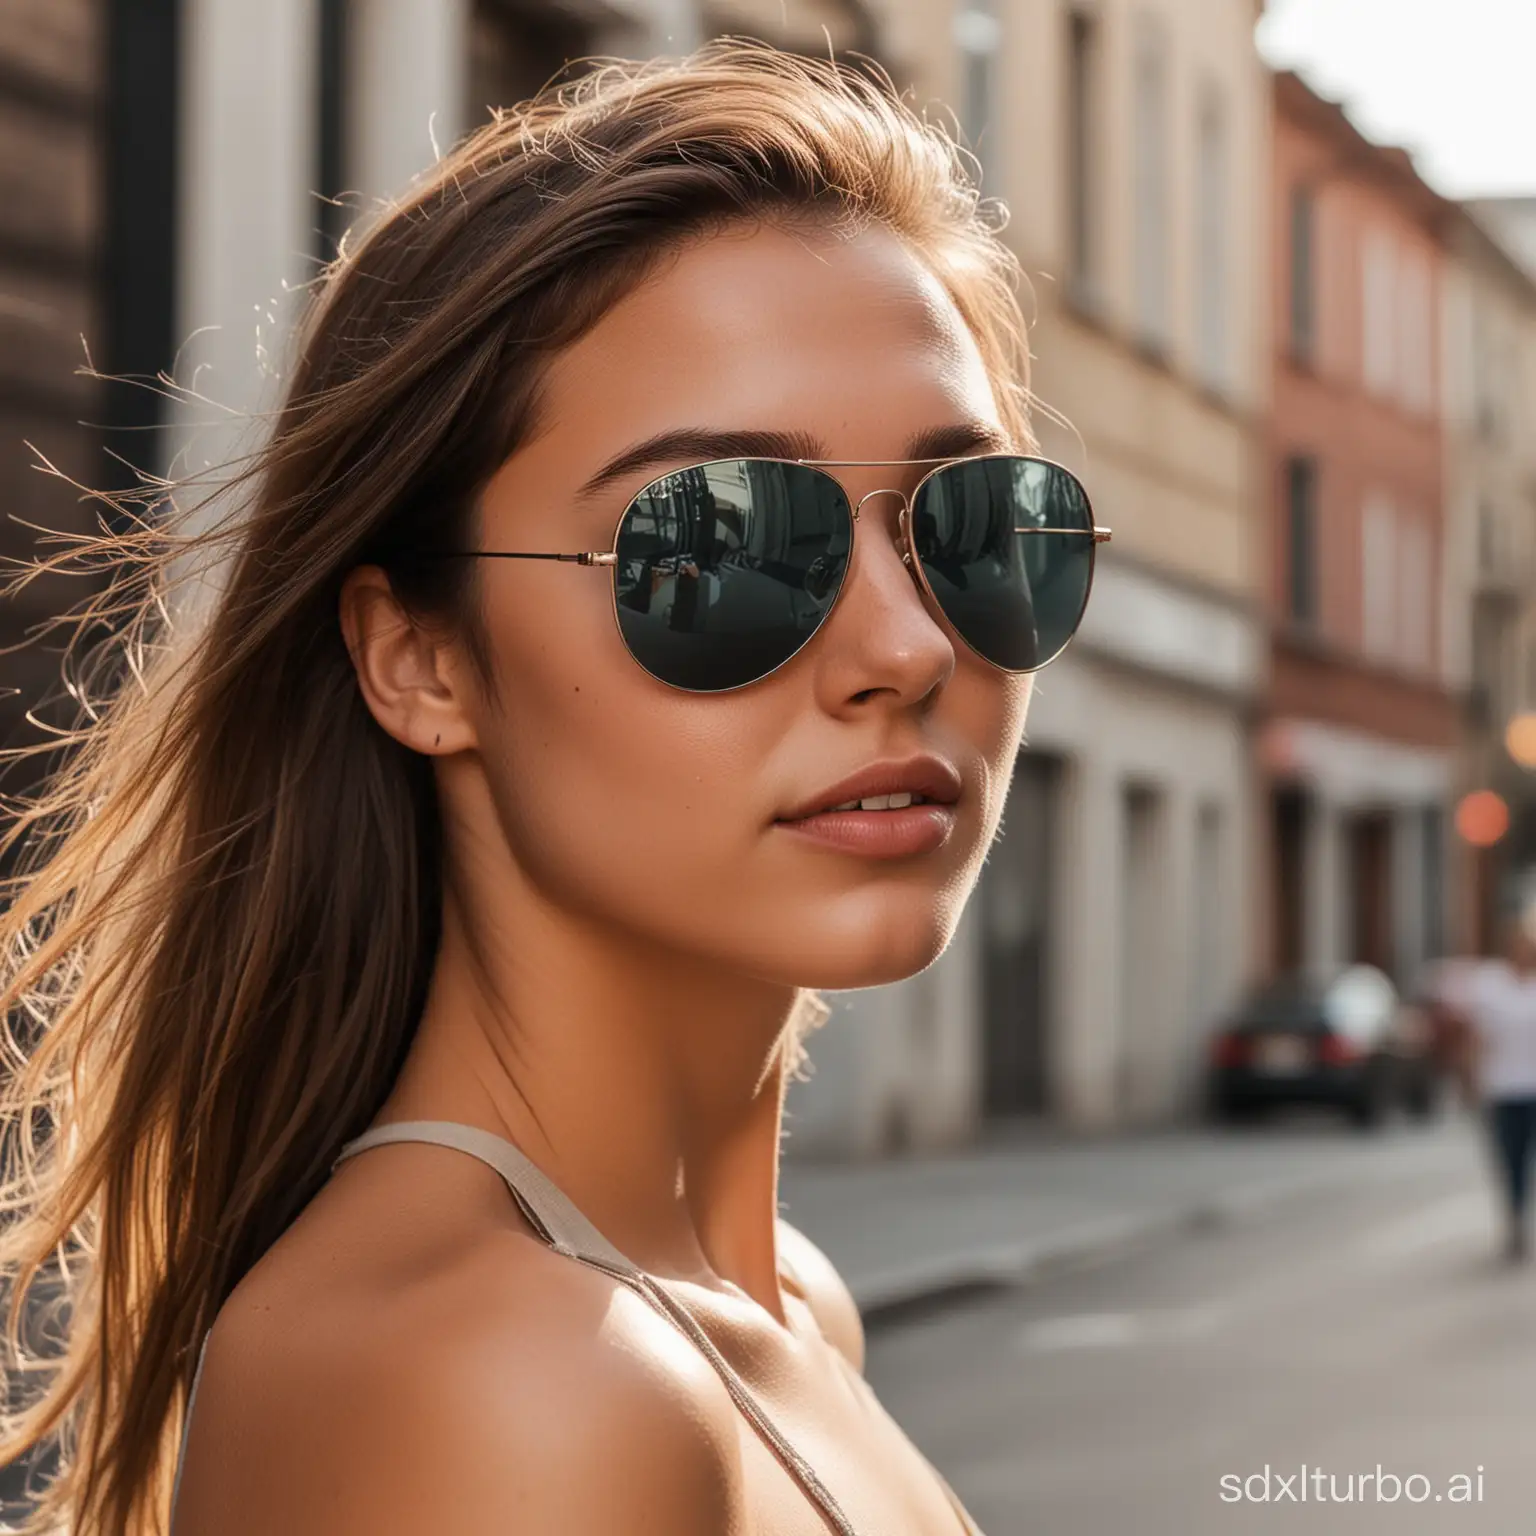 a girl on the street, wearing aviator sunglasses,matt skin,